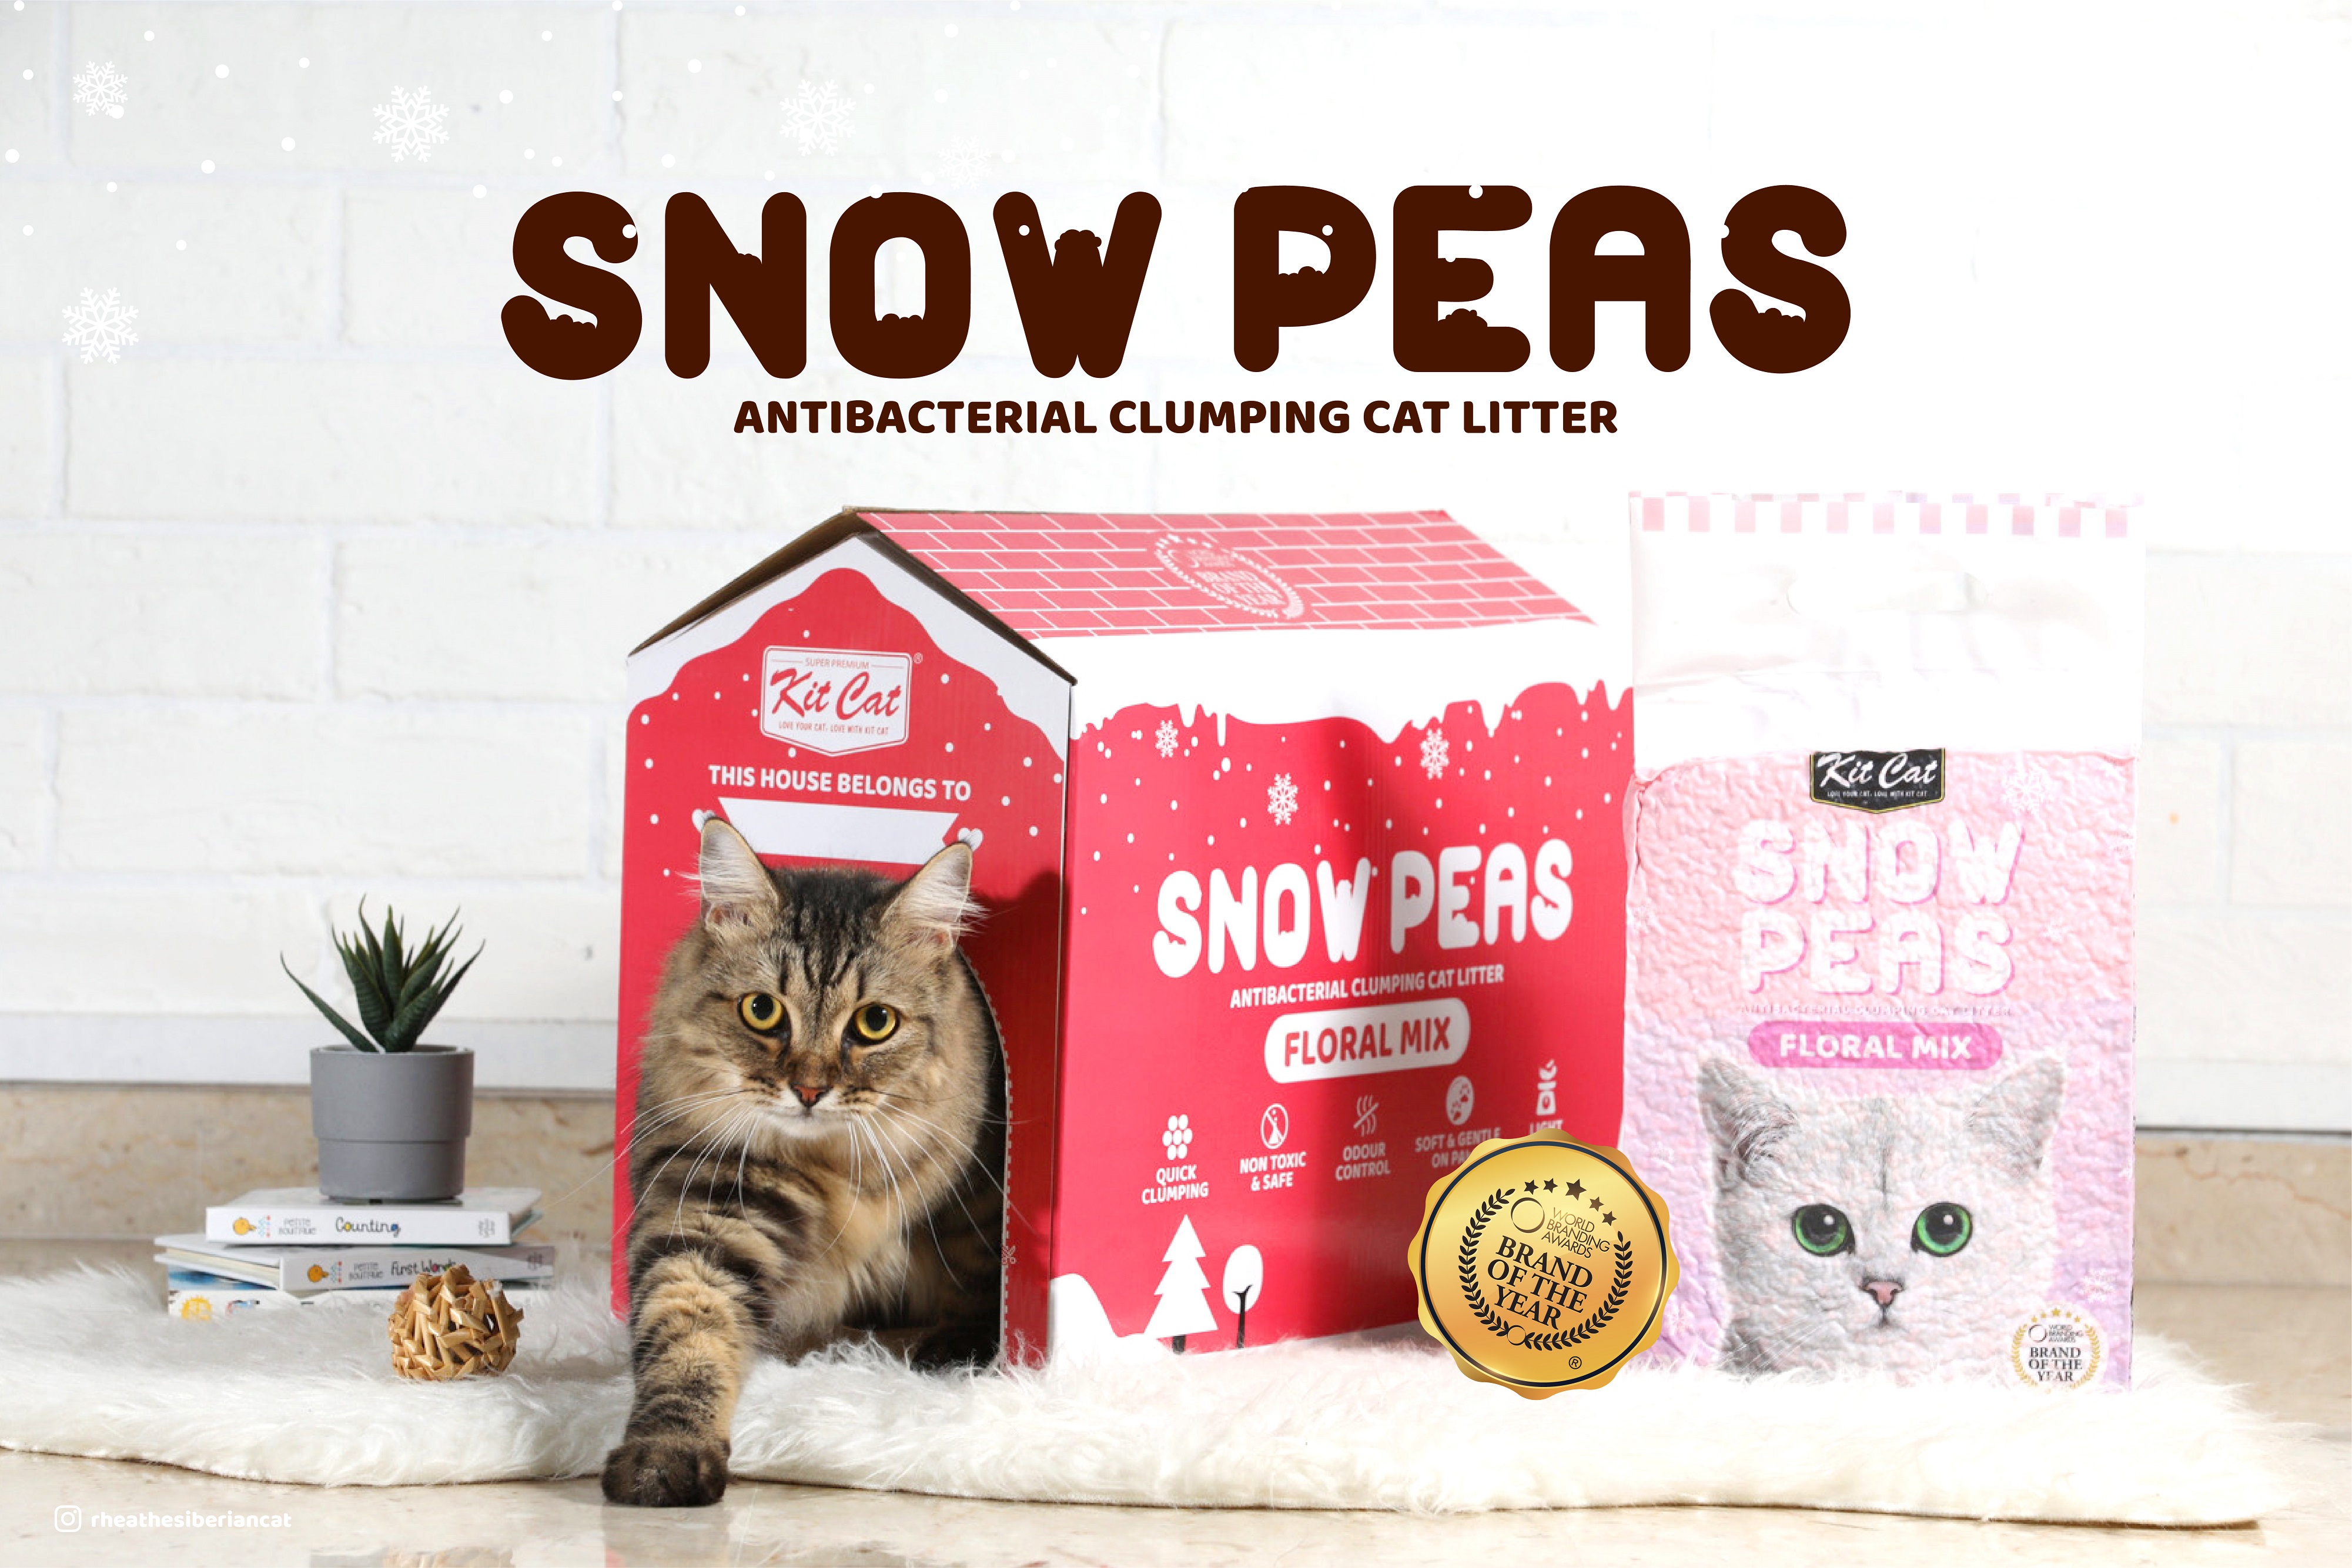 Snow Peas Cat litter